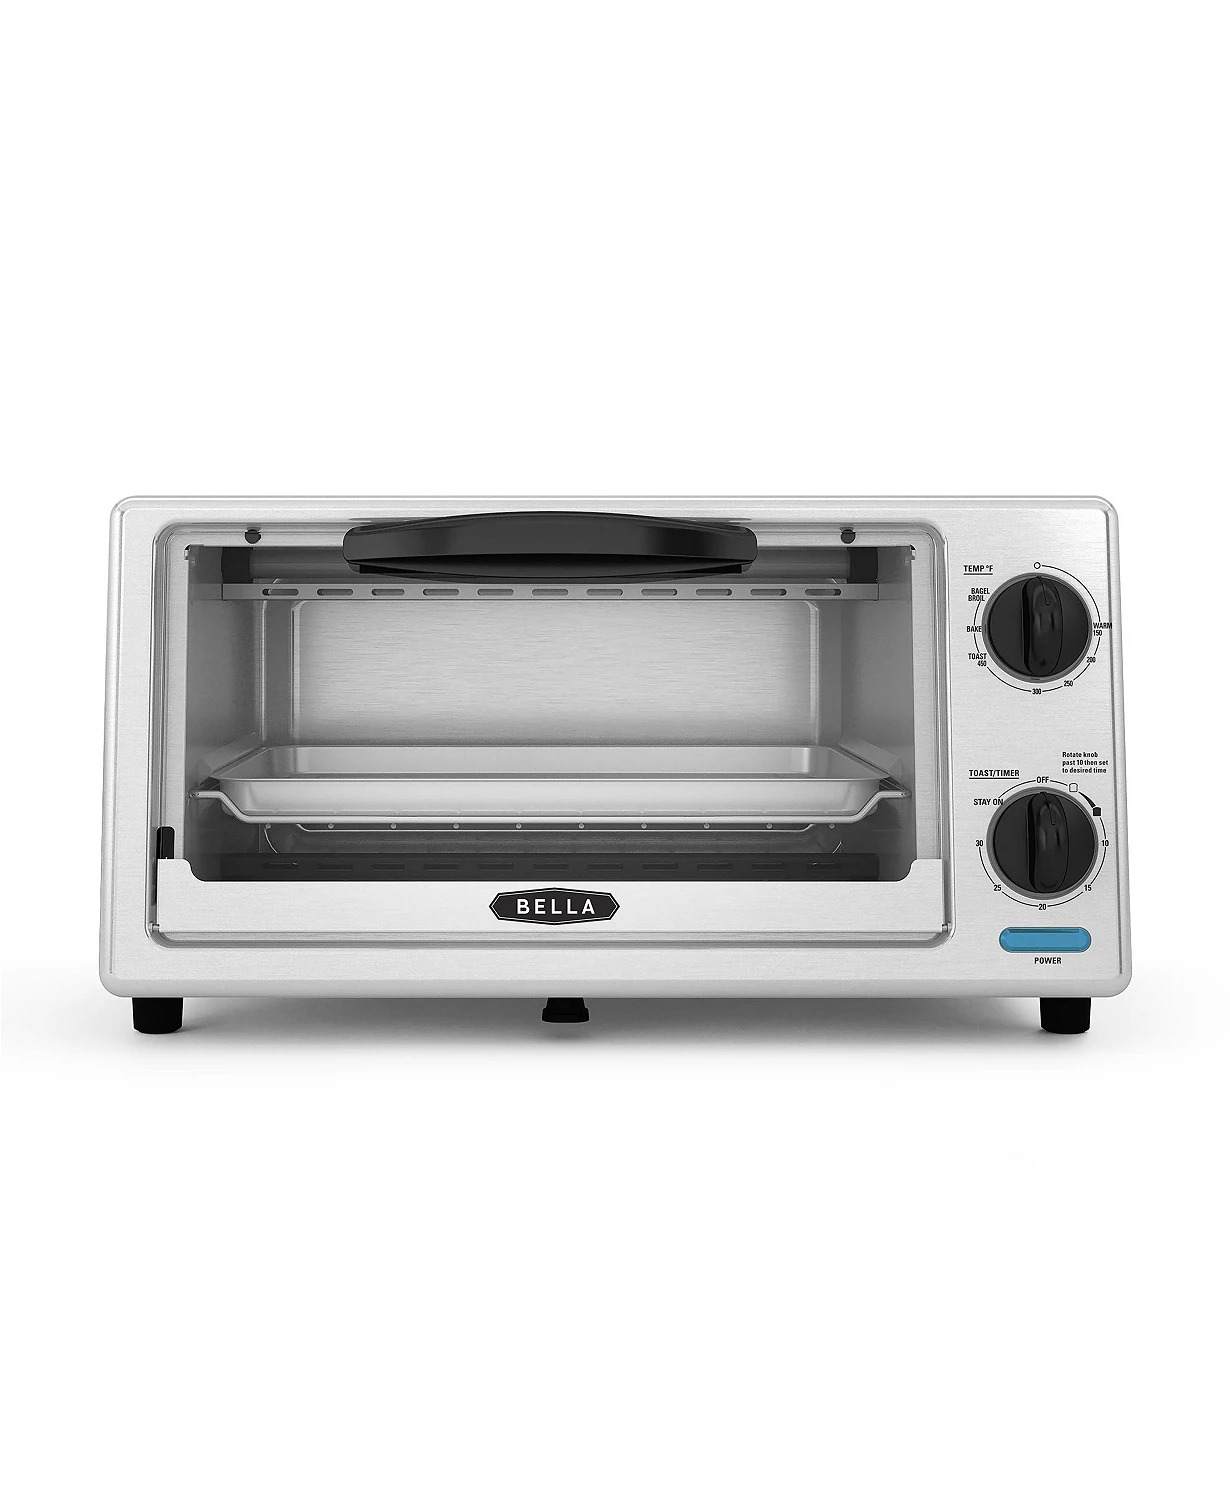 Bella 4-Slice Stainless Steel Toaster Oven $14.99